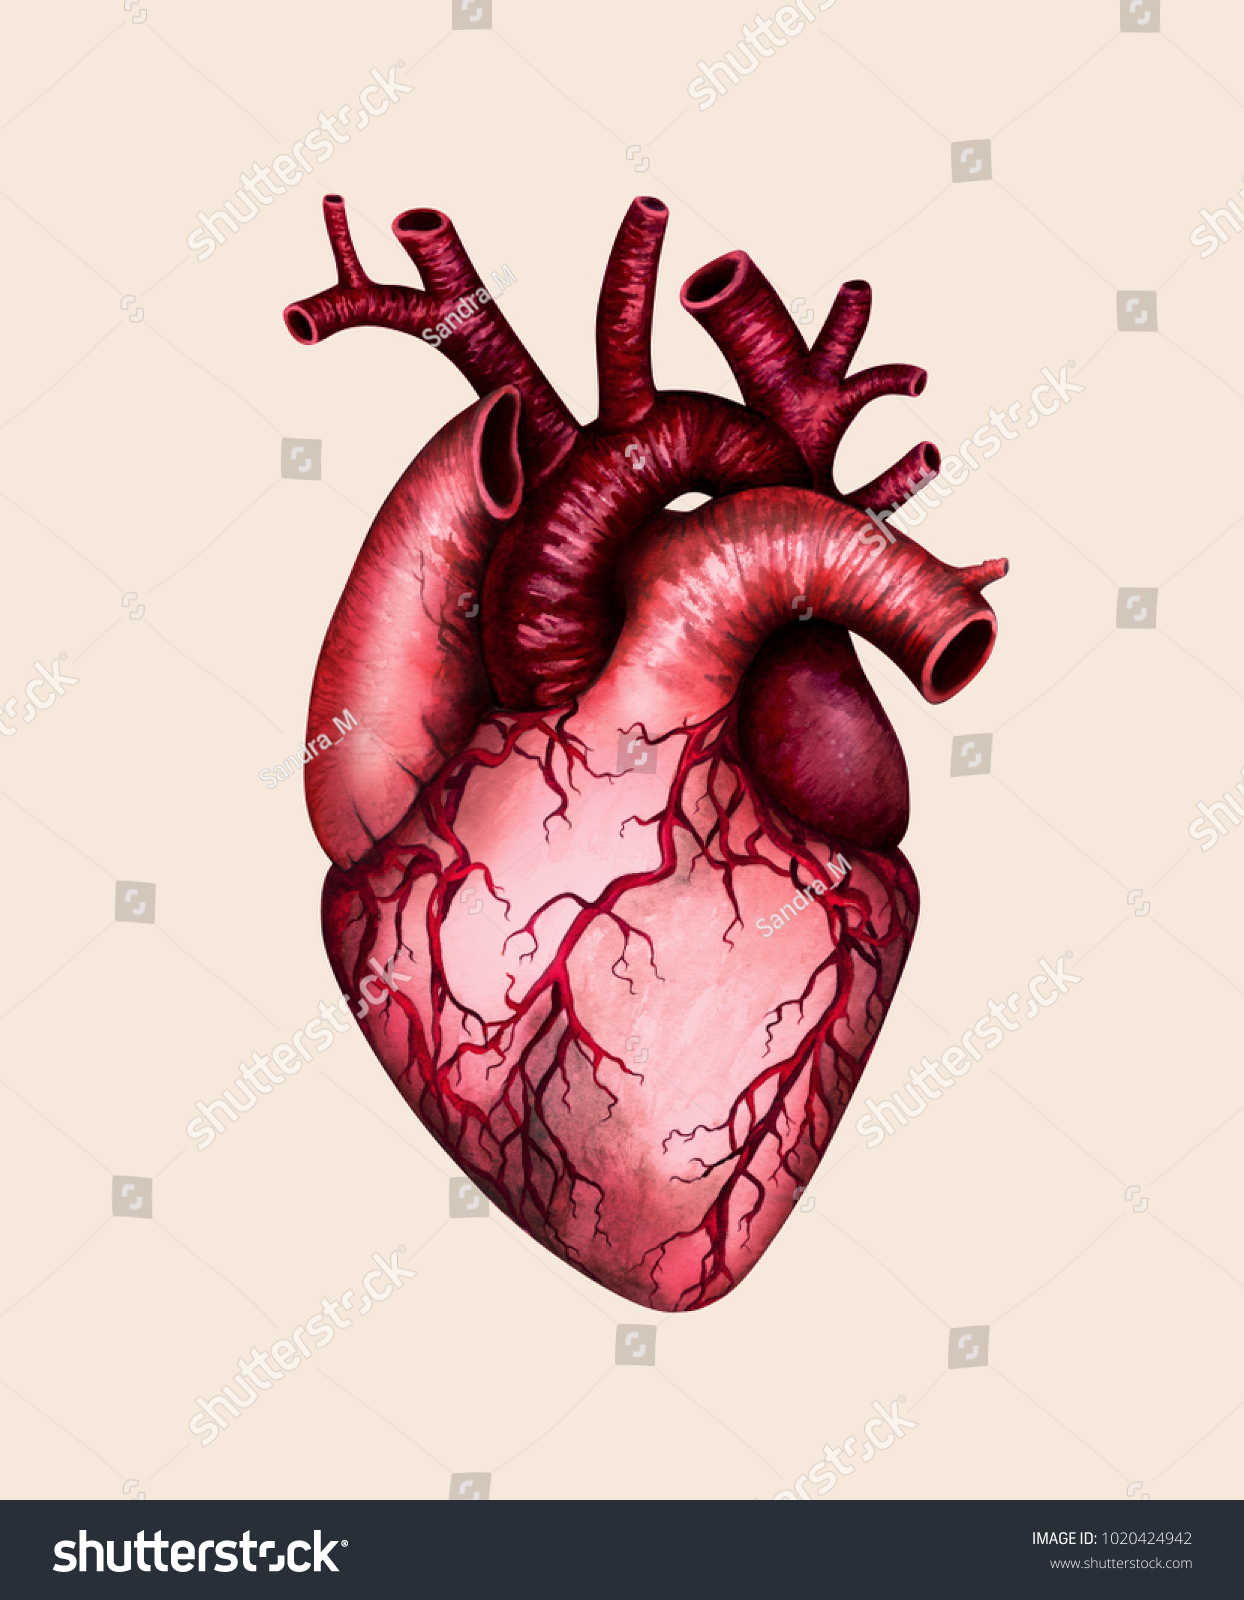 Anatomical Human Heart Watercolor Hand Drawn Stock Illustration 1020424942 Shutterstock 7960